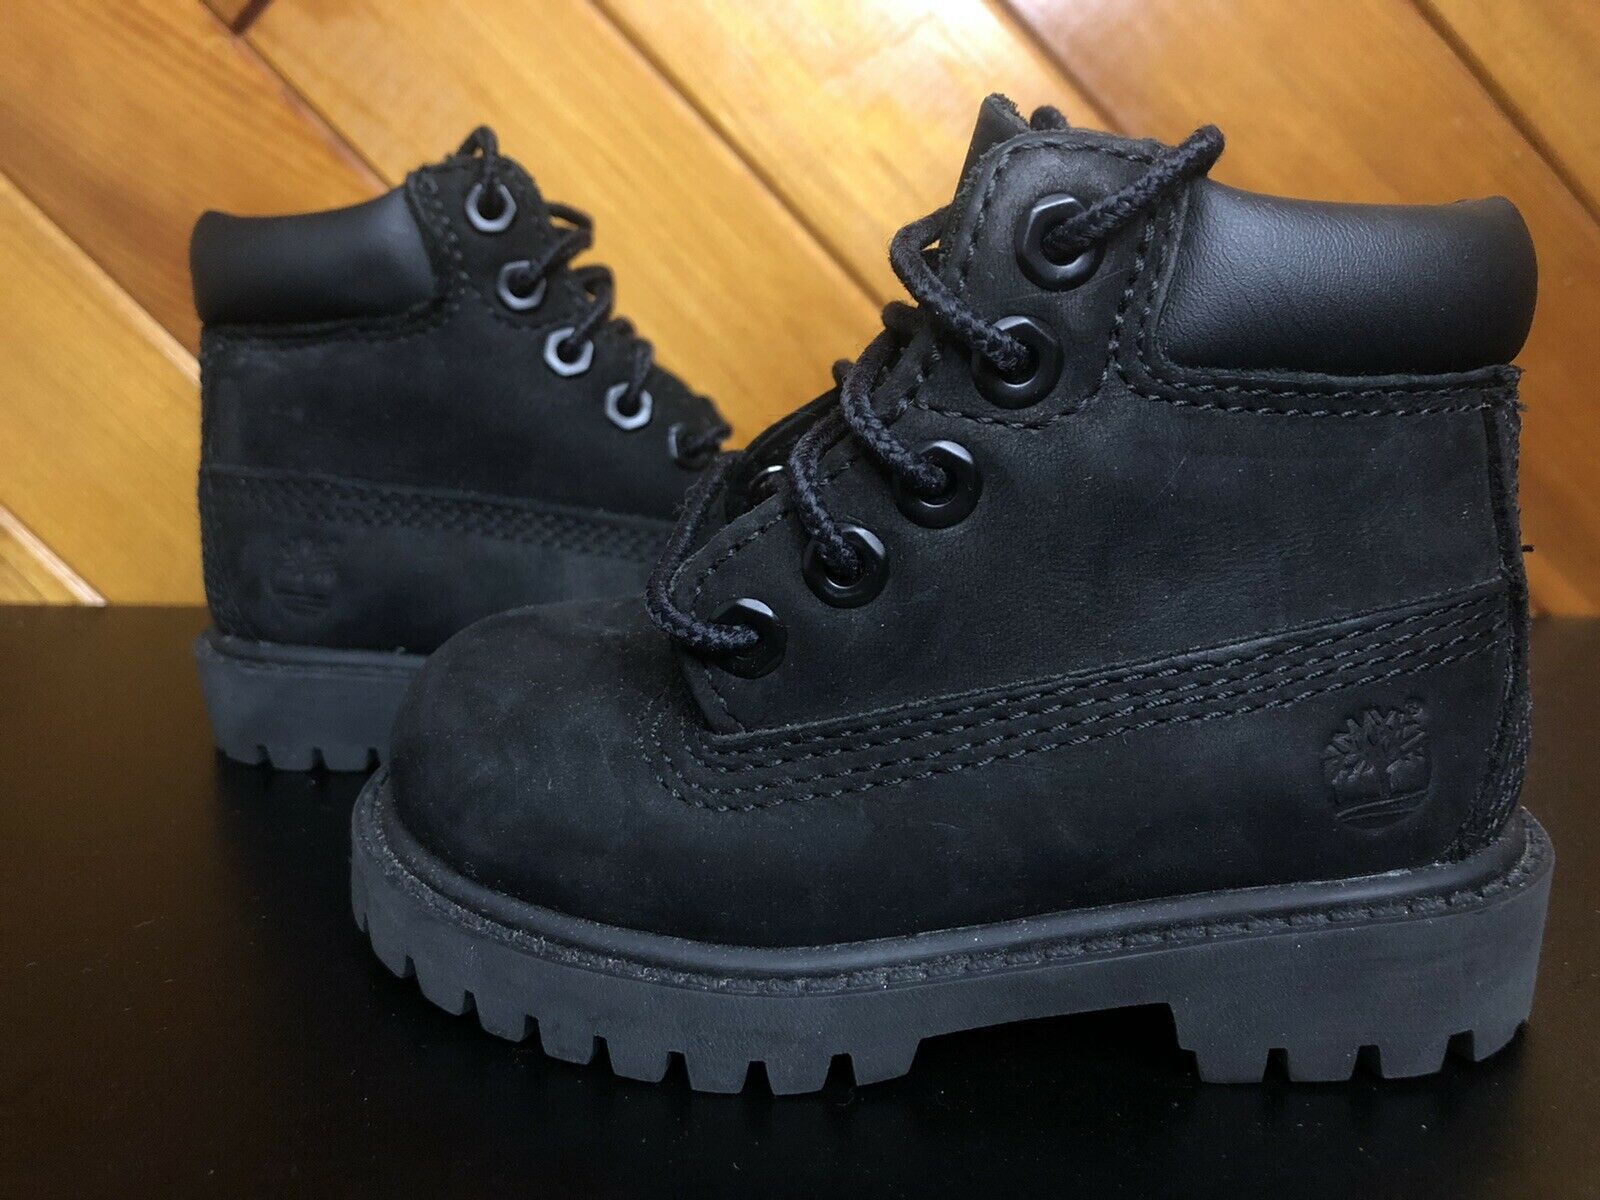 Timberland Premium Boots Black on Black Waterproof Shoe Baby Toddler Size 5C